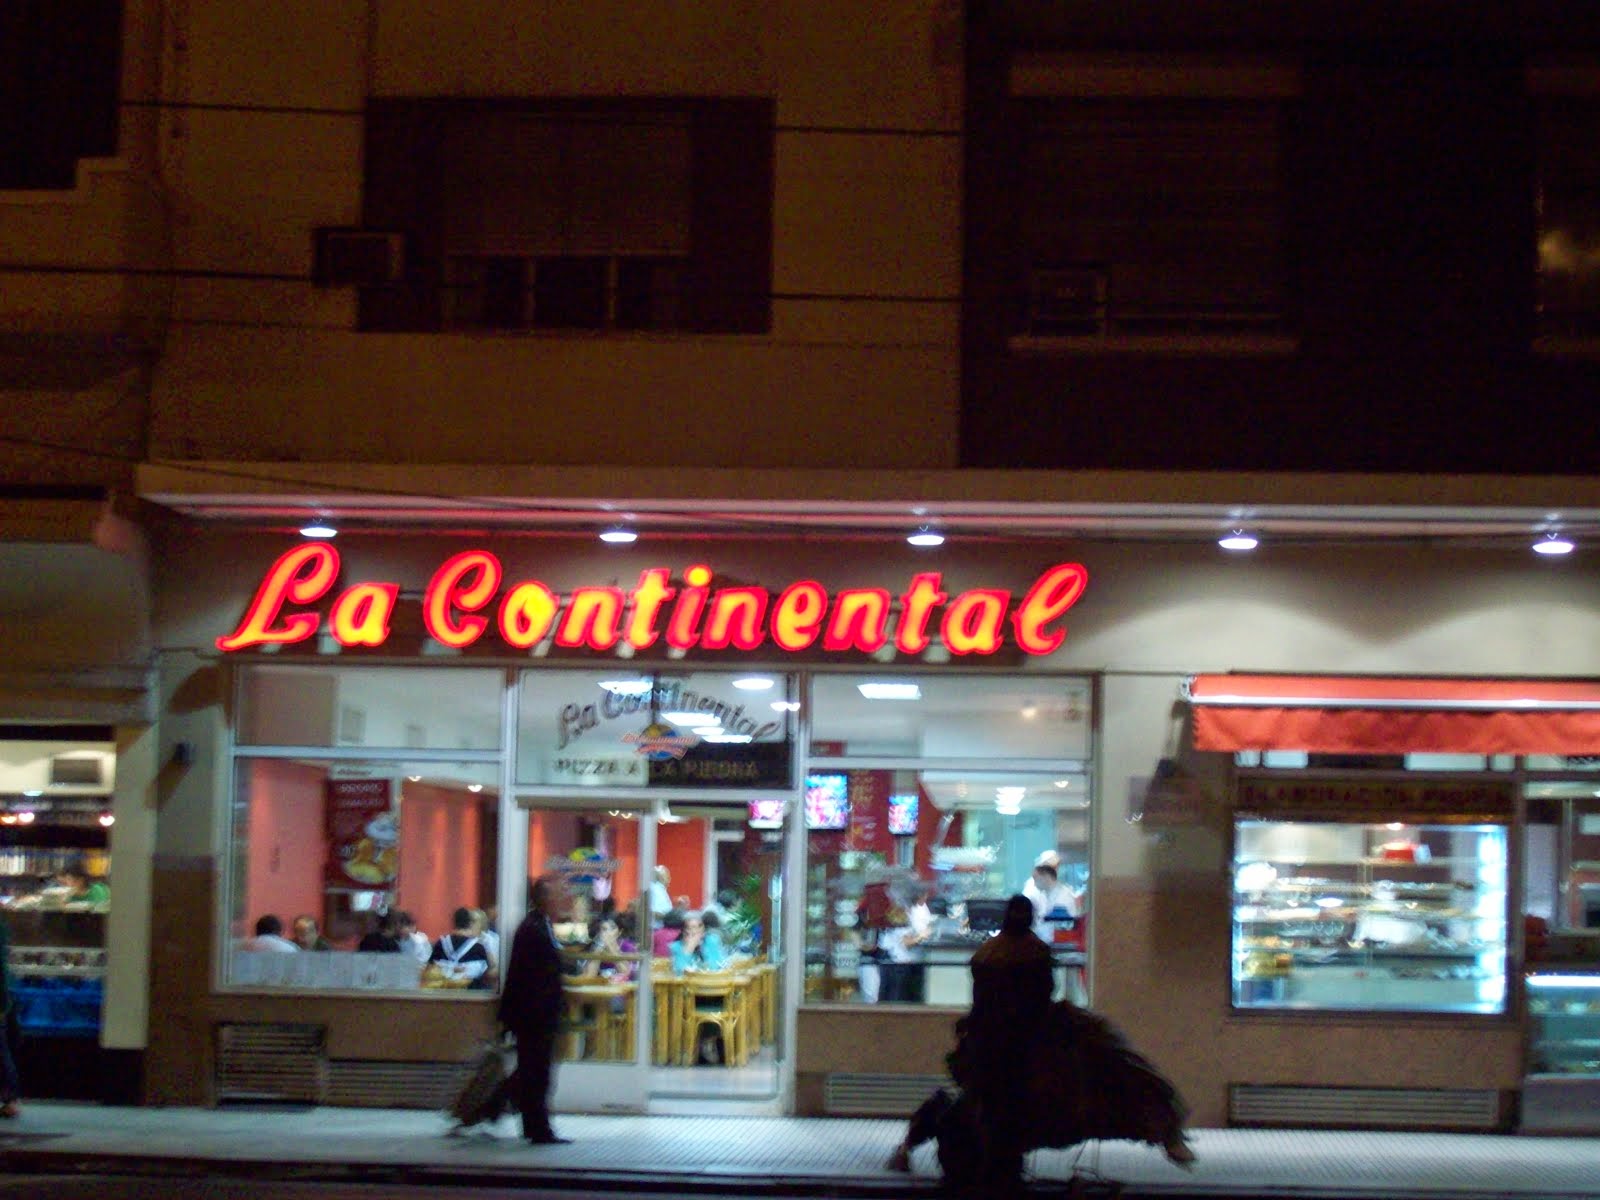 "La Continental"